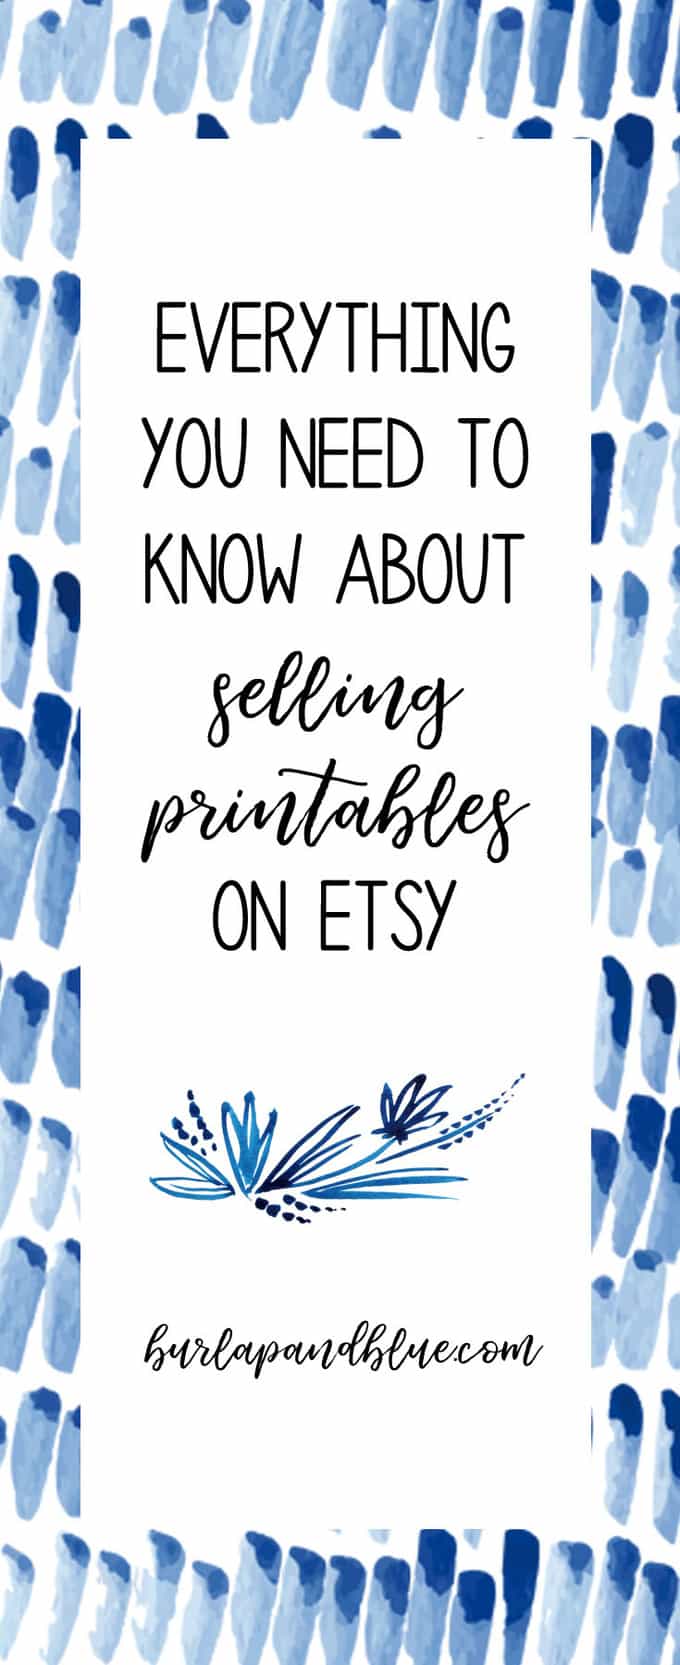 Best Selling Printables On Etsy